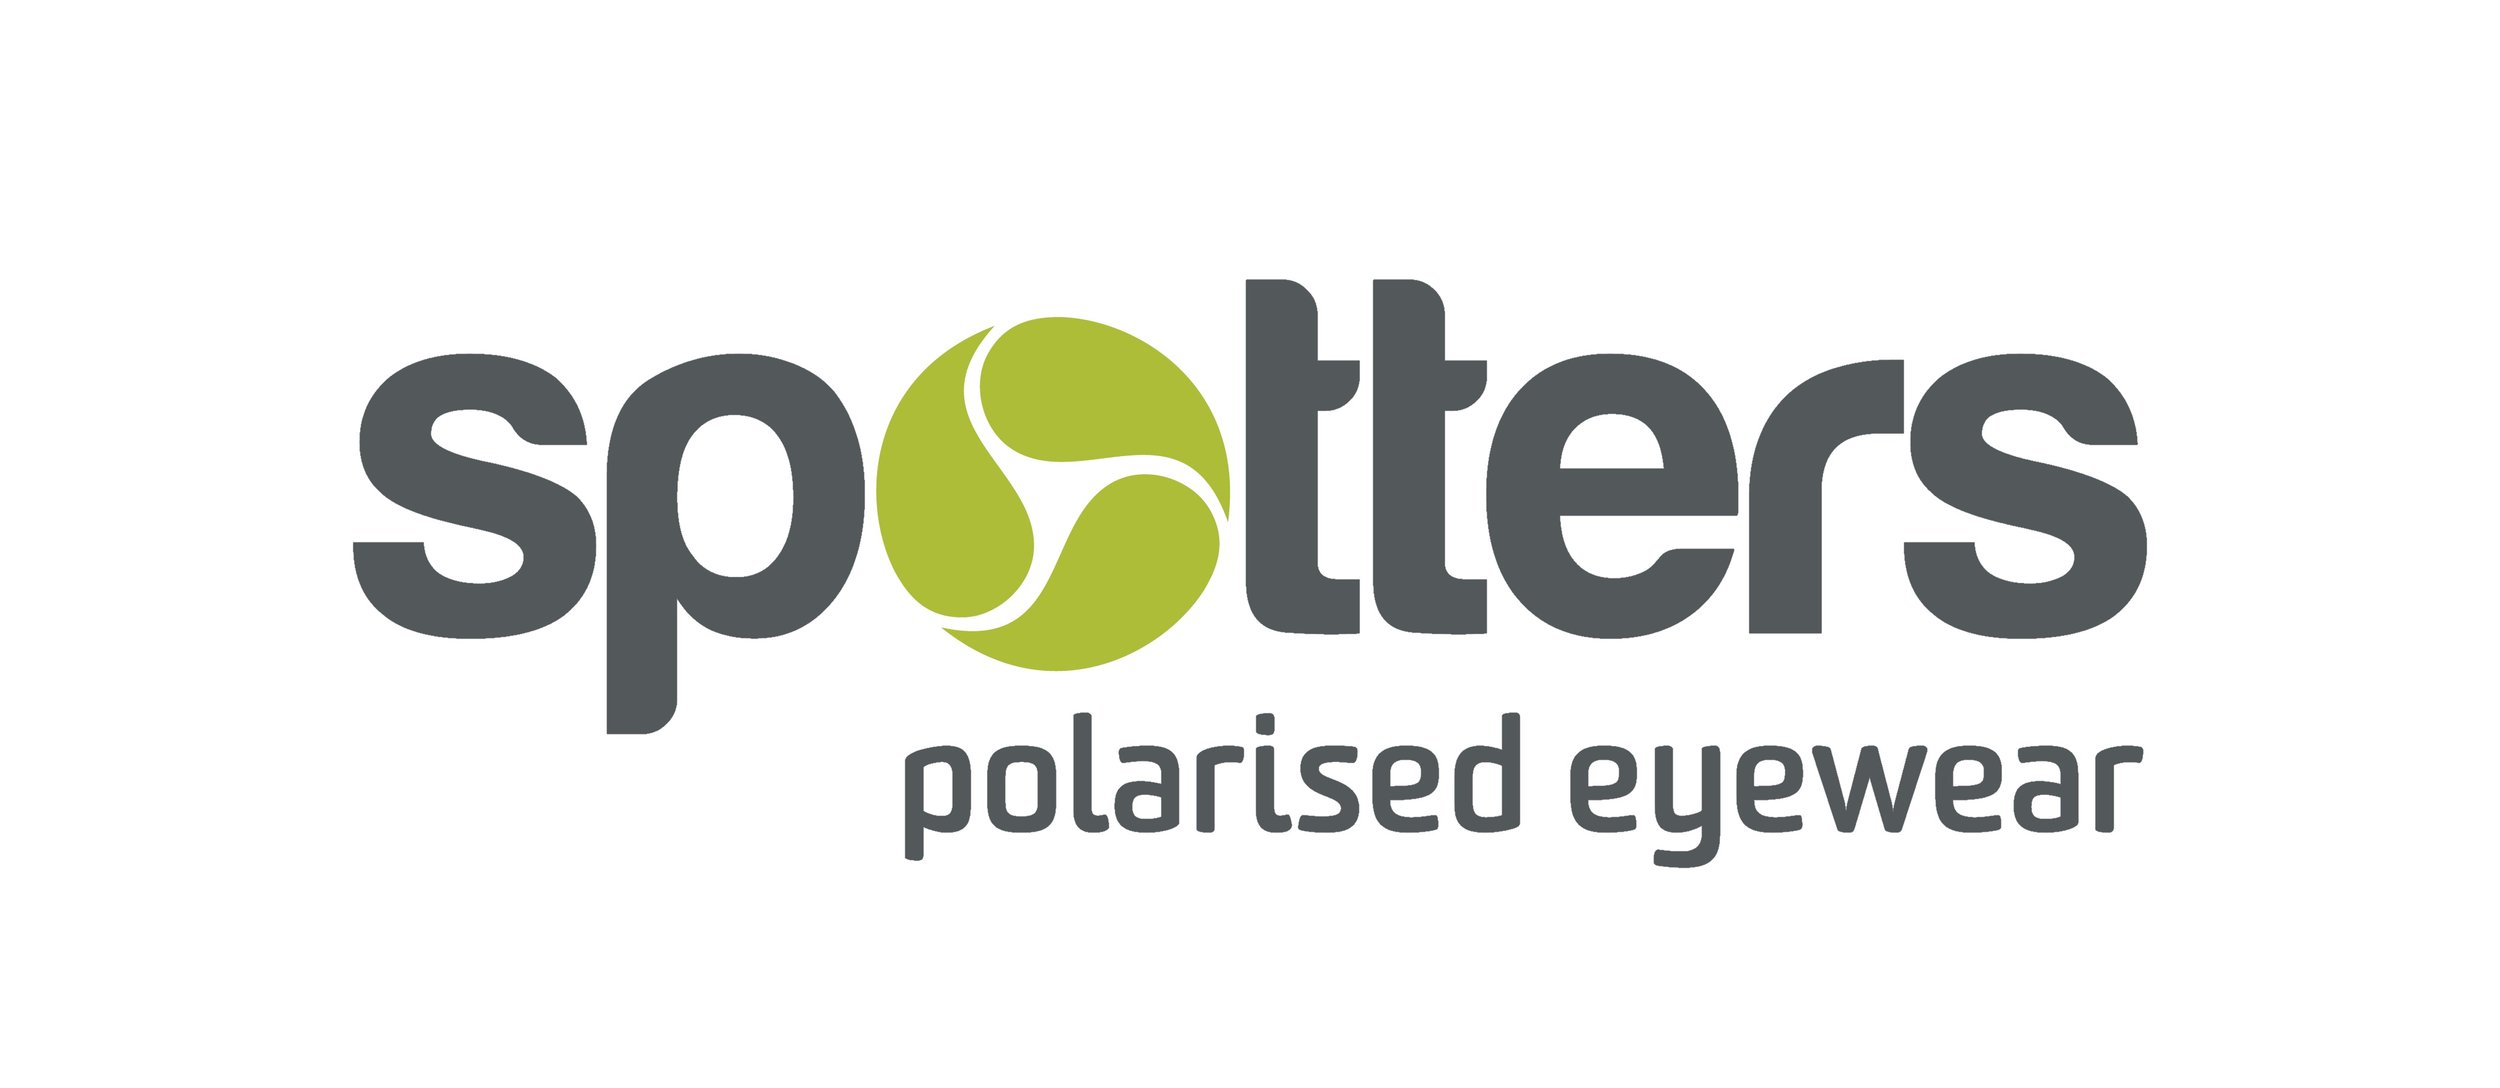 Spotters_Logo_Grey_polarised eyewear.jpg